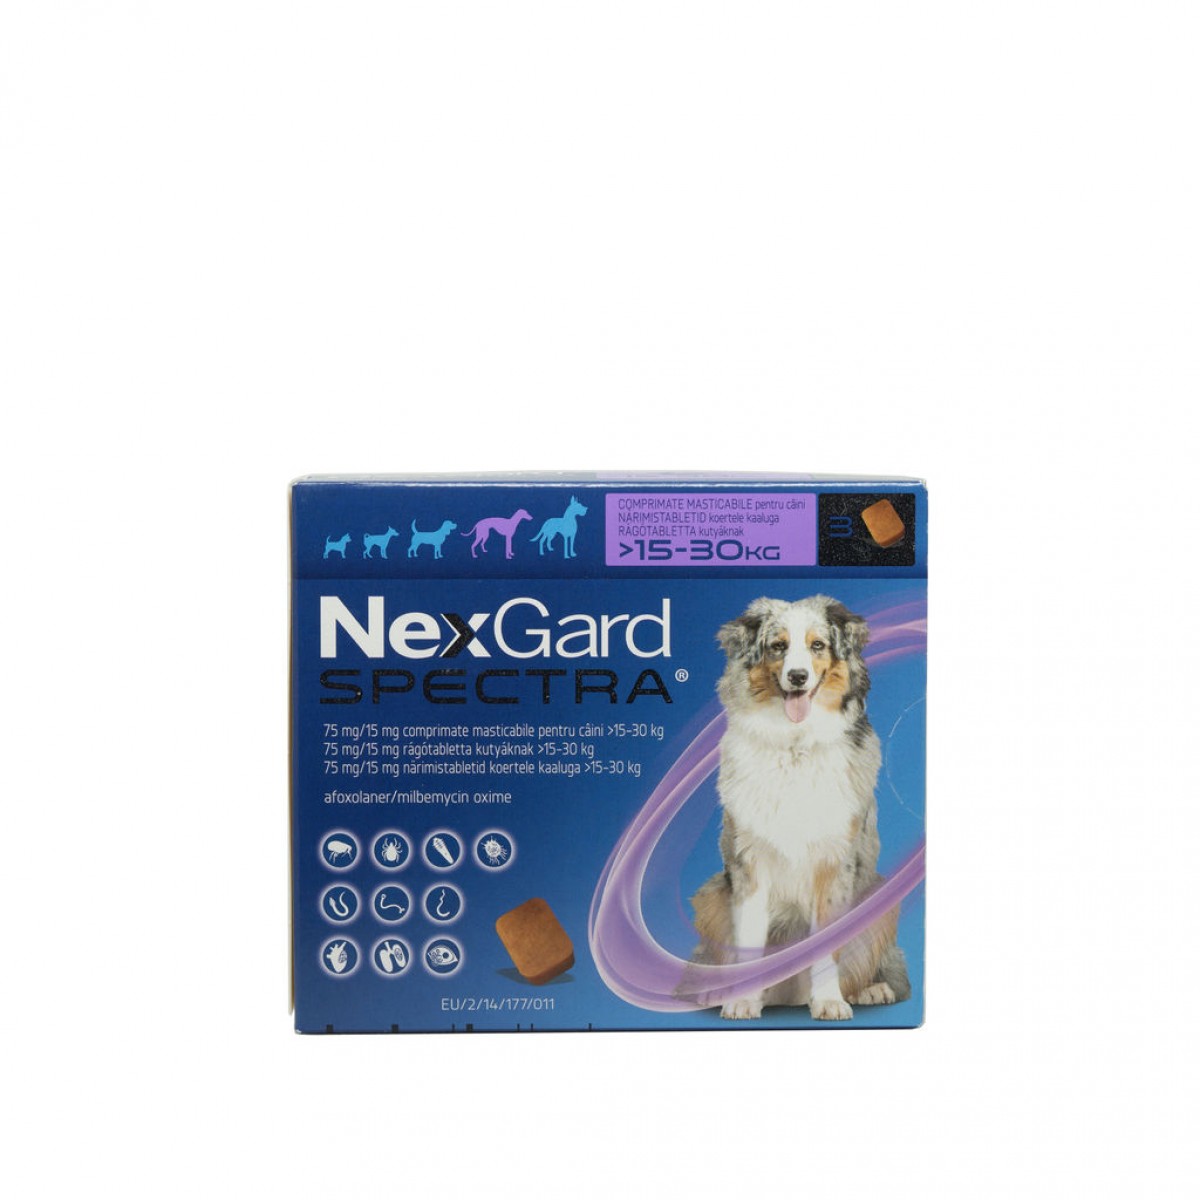 Nexgard Spectra pentru caini L - (15-30kg), 3 comprimate masticabile, Antiparazitare externe, Antiparazitare, Câini 